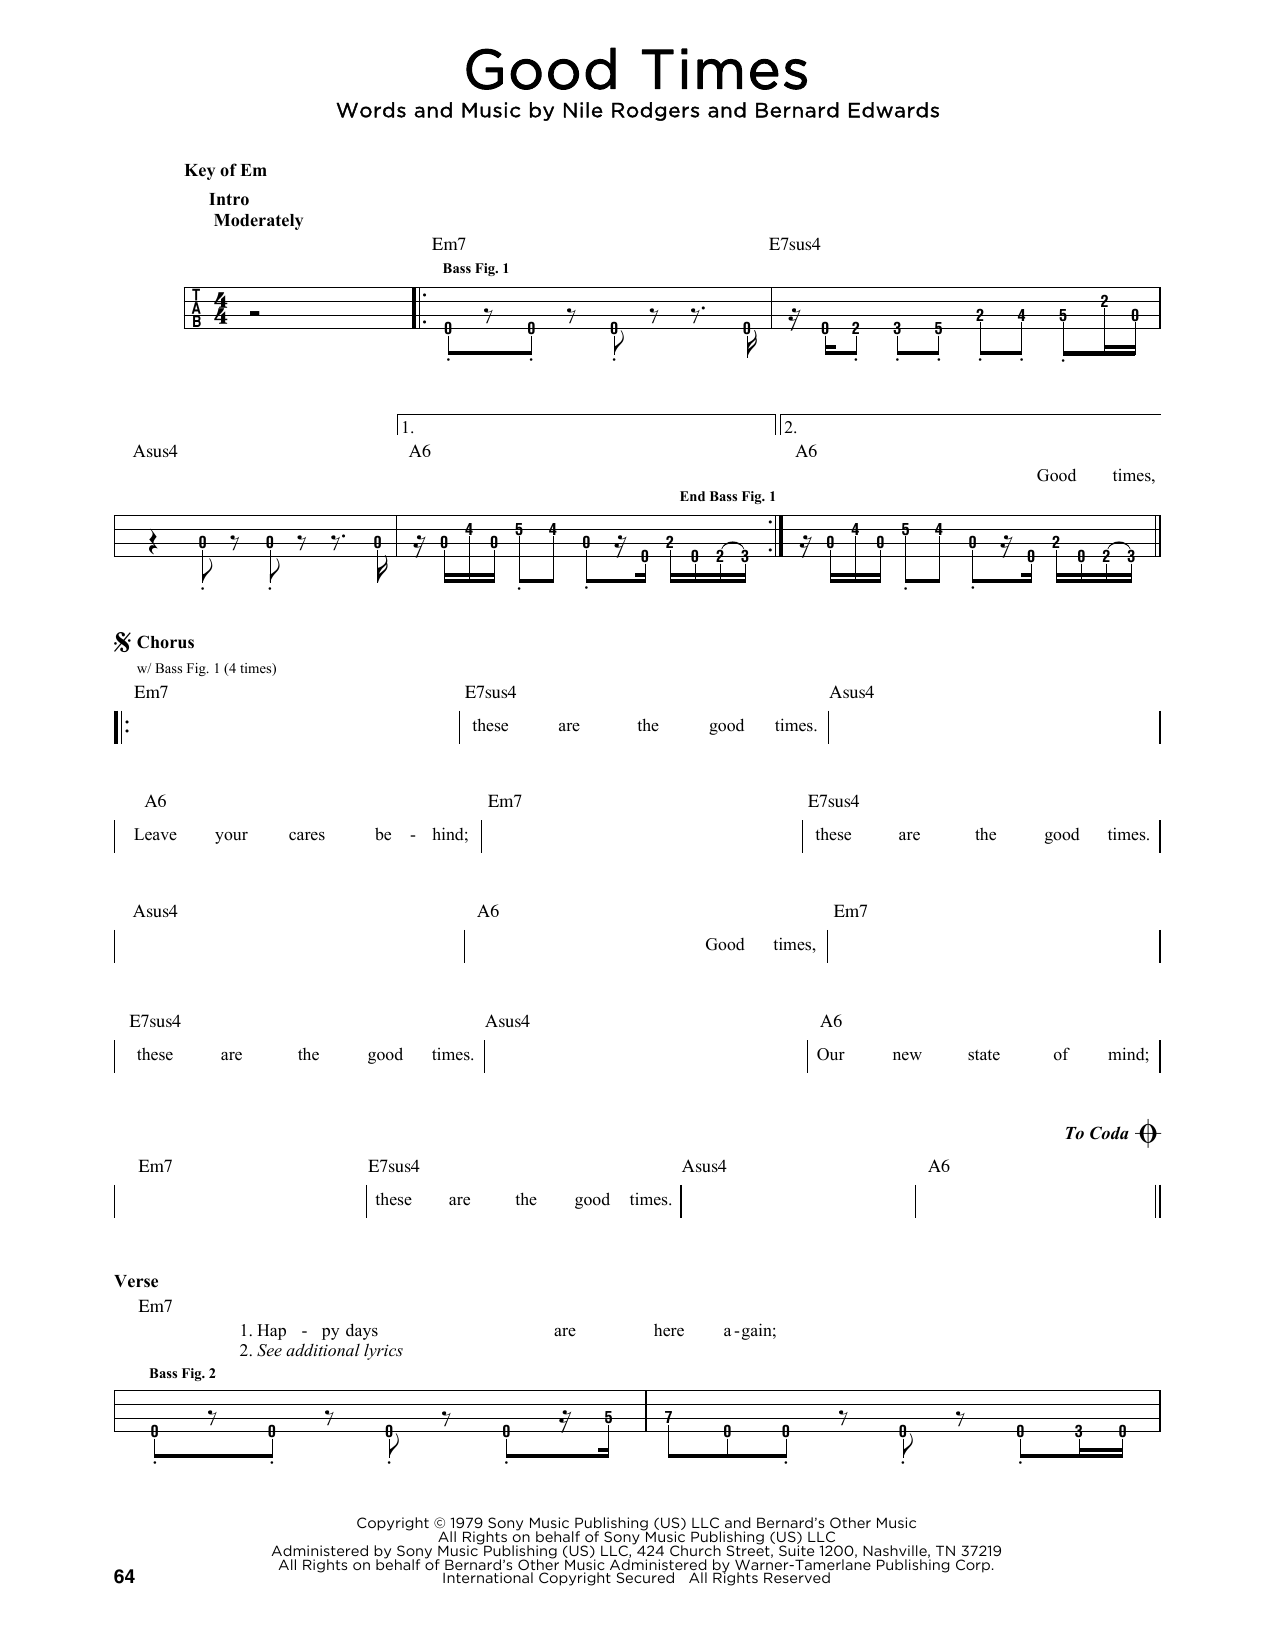 Chic Good Times sheet music notes printable PDF score